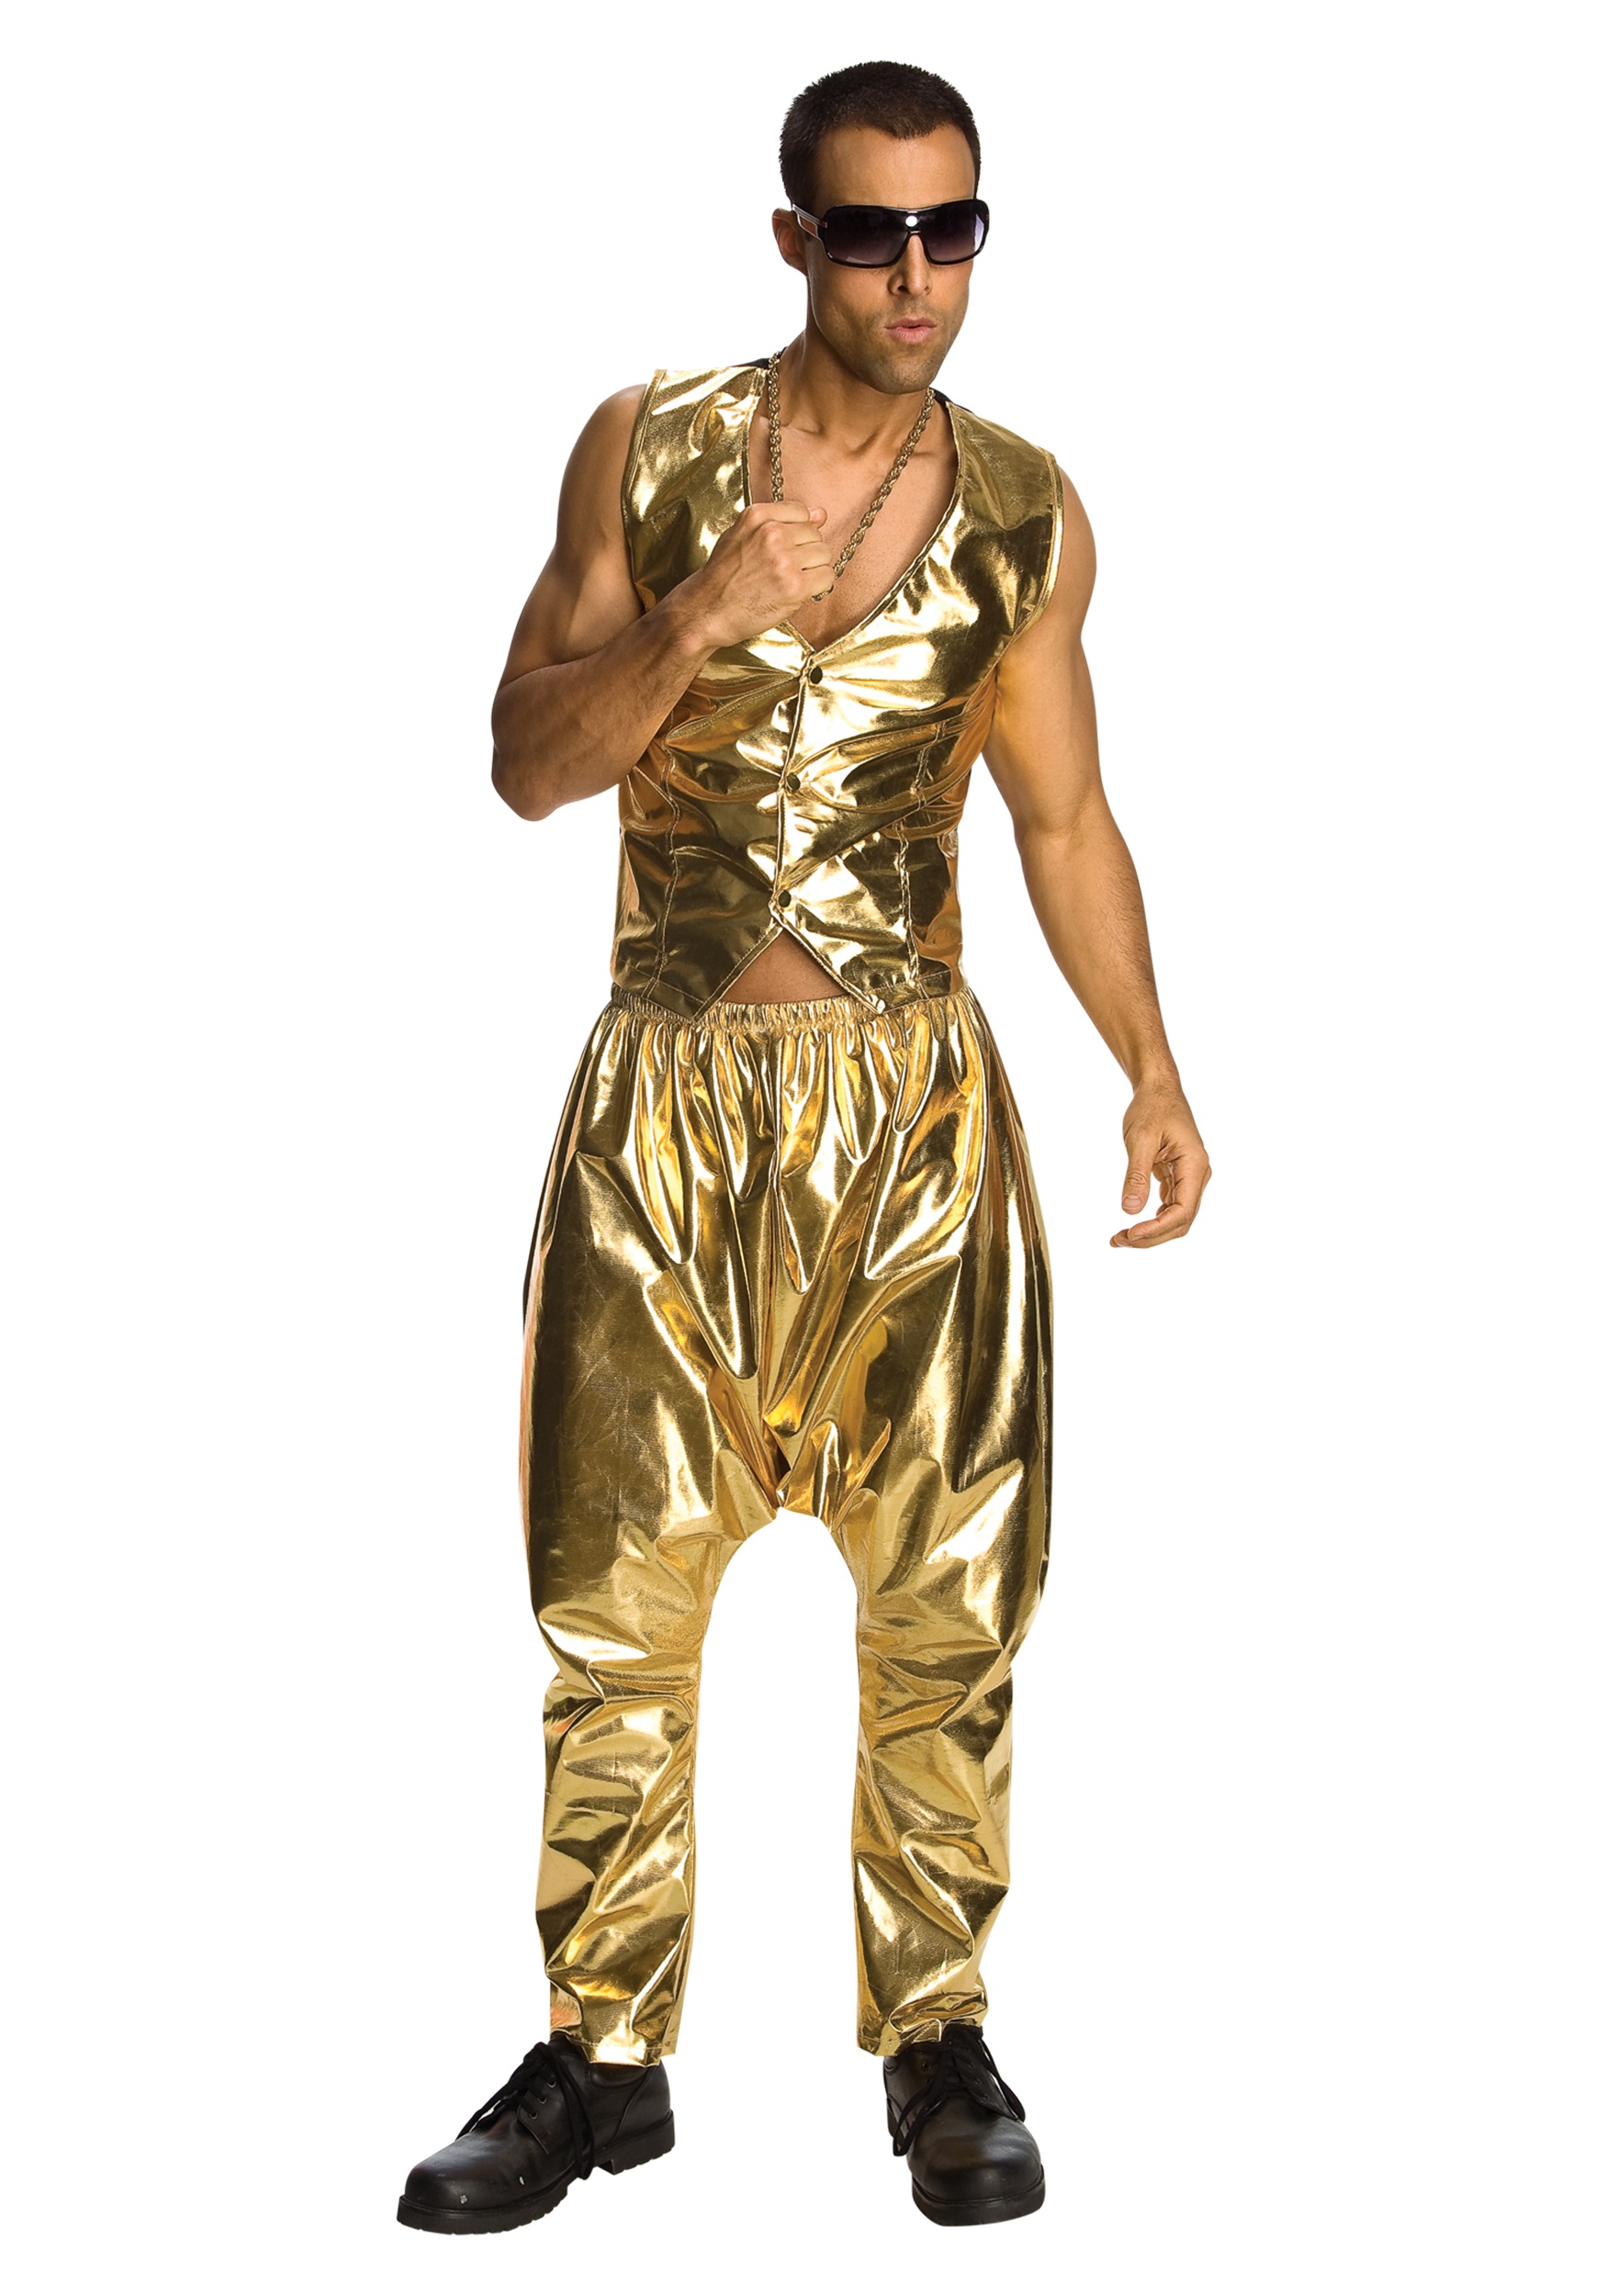 Hammer Time  Gold pants Rapper costume Mc hammer pants